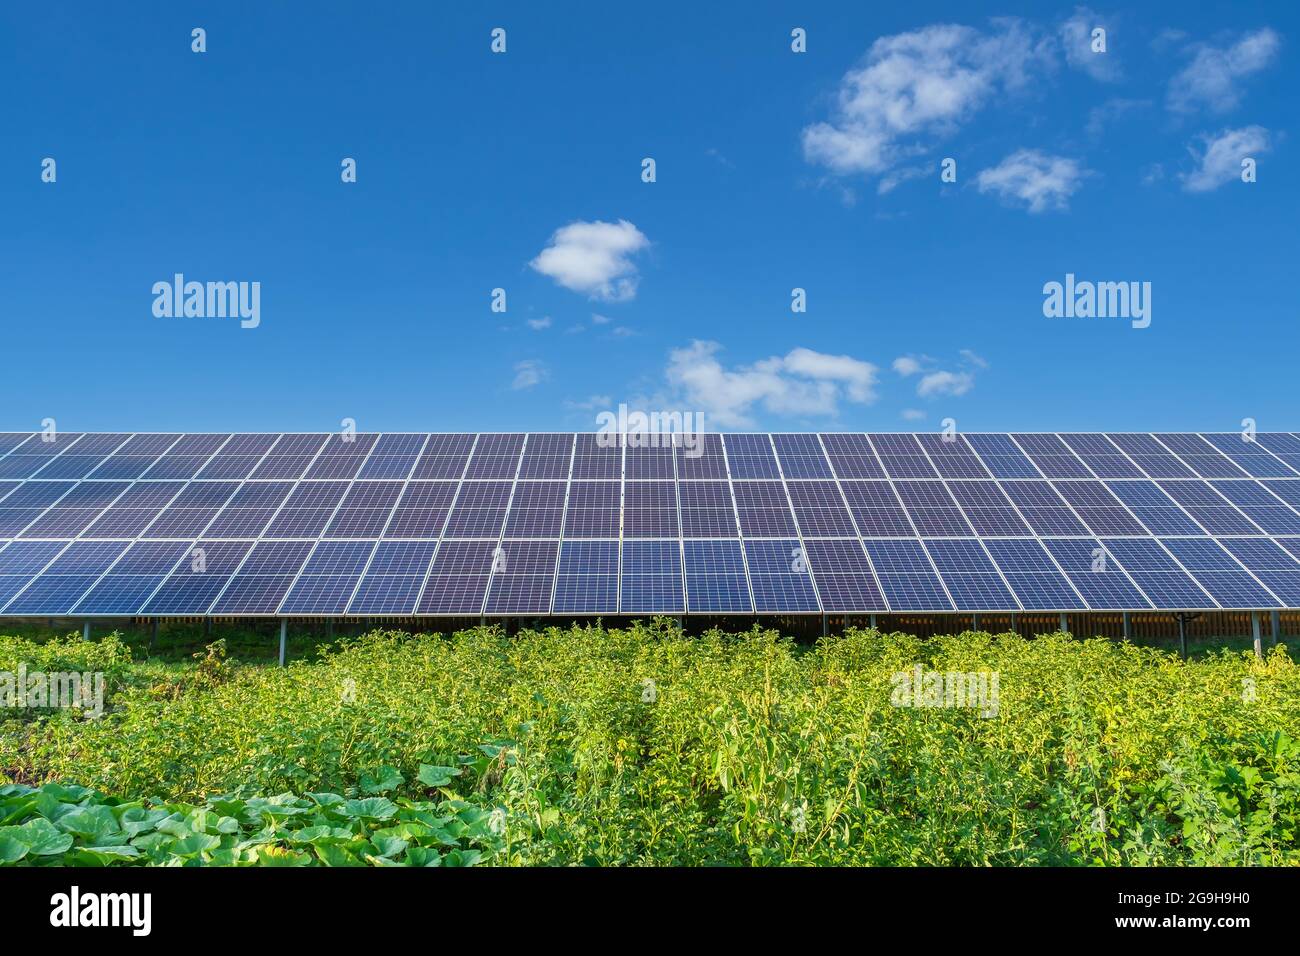 Solar panels on a solar farm under a blue sky in a backyard vegetable garden Stock Photo